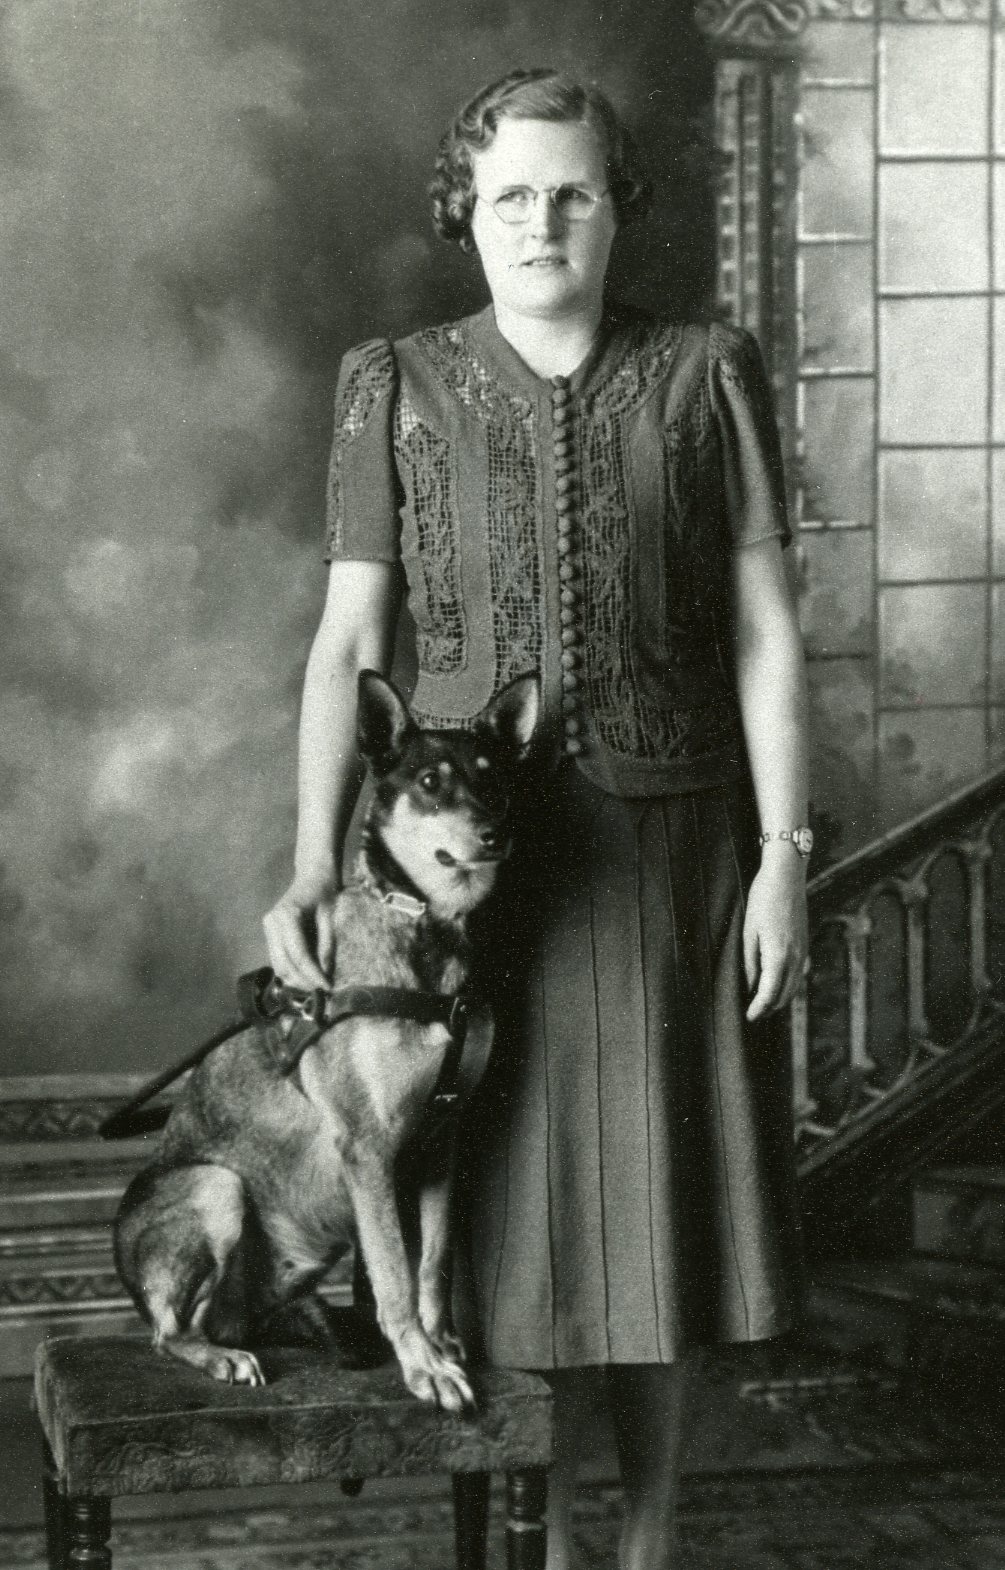 Viola Eid,1932 Concordia graduate with her seeing eye dog 